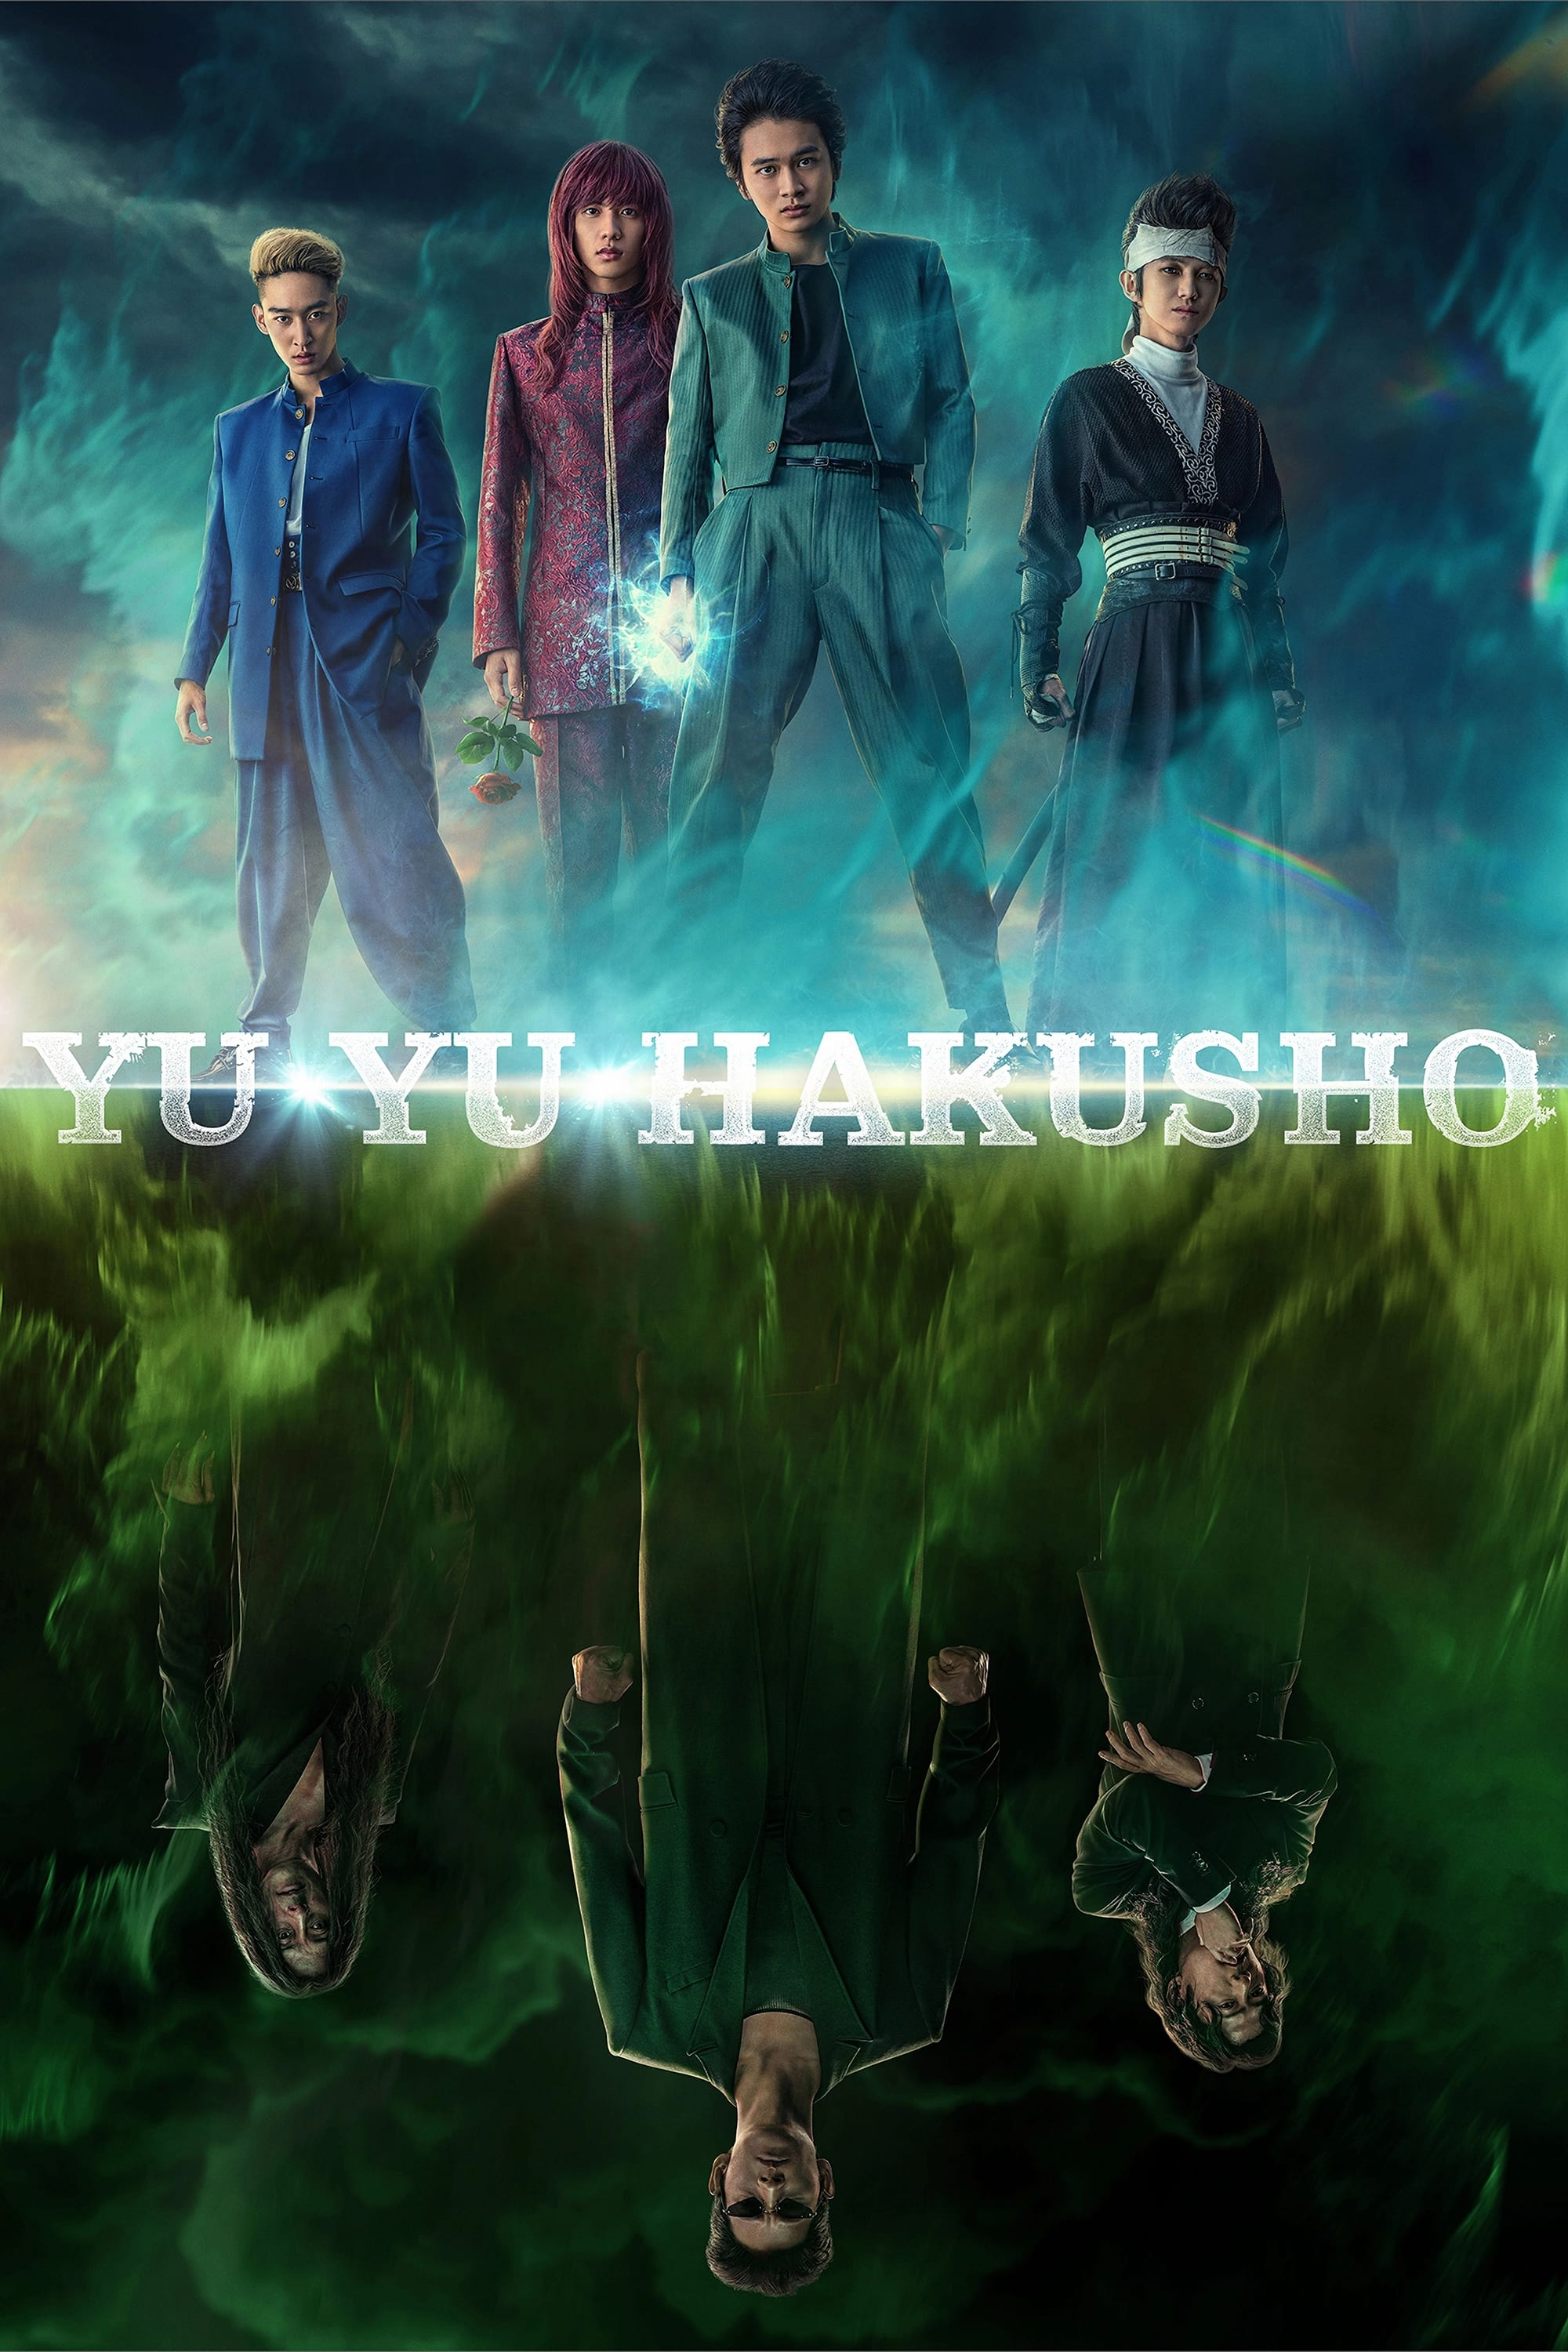 YuYu Hakusho - Assistindo a Luta - Excelente Anime! Bons Tempos !